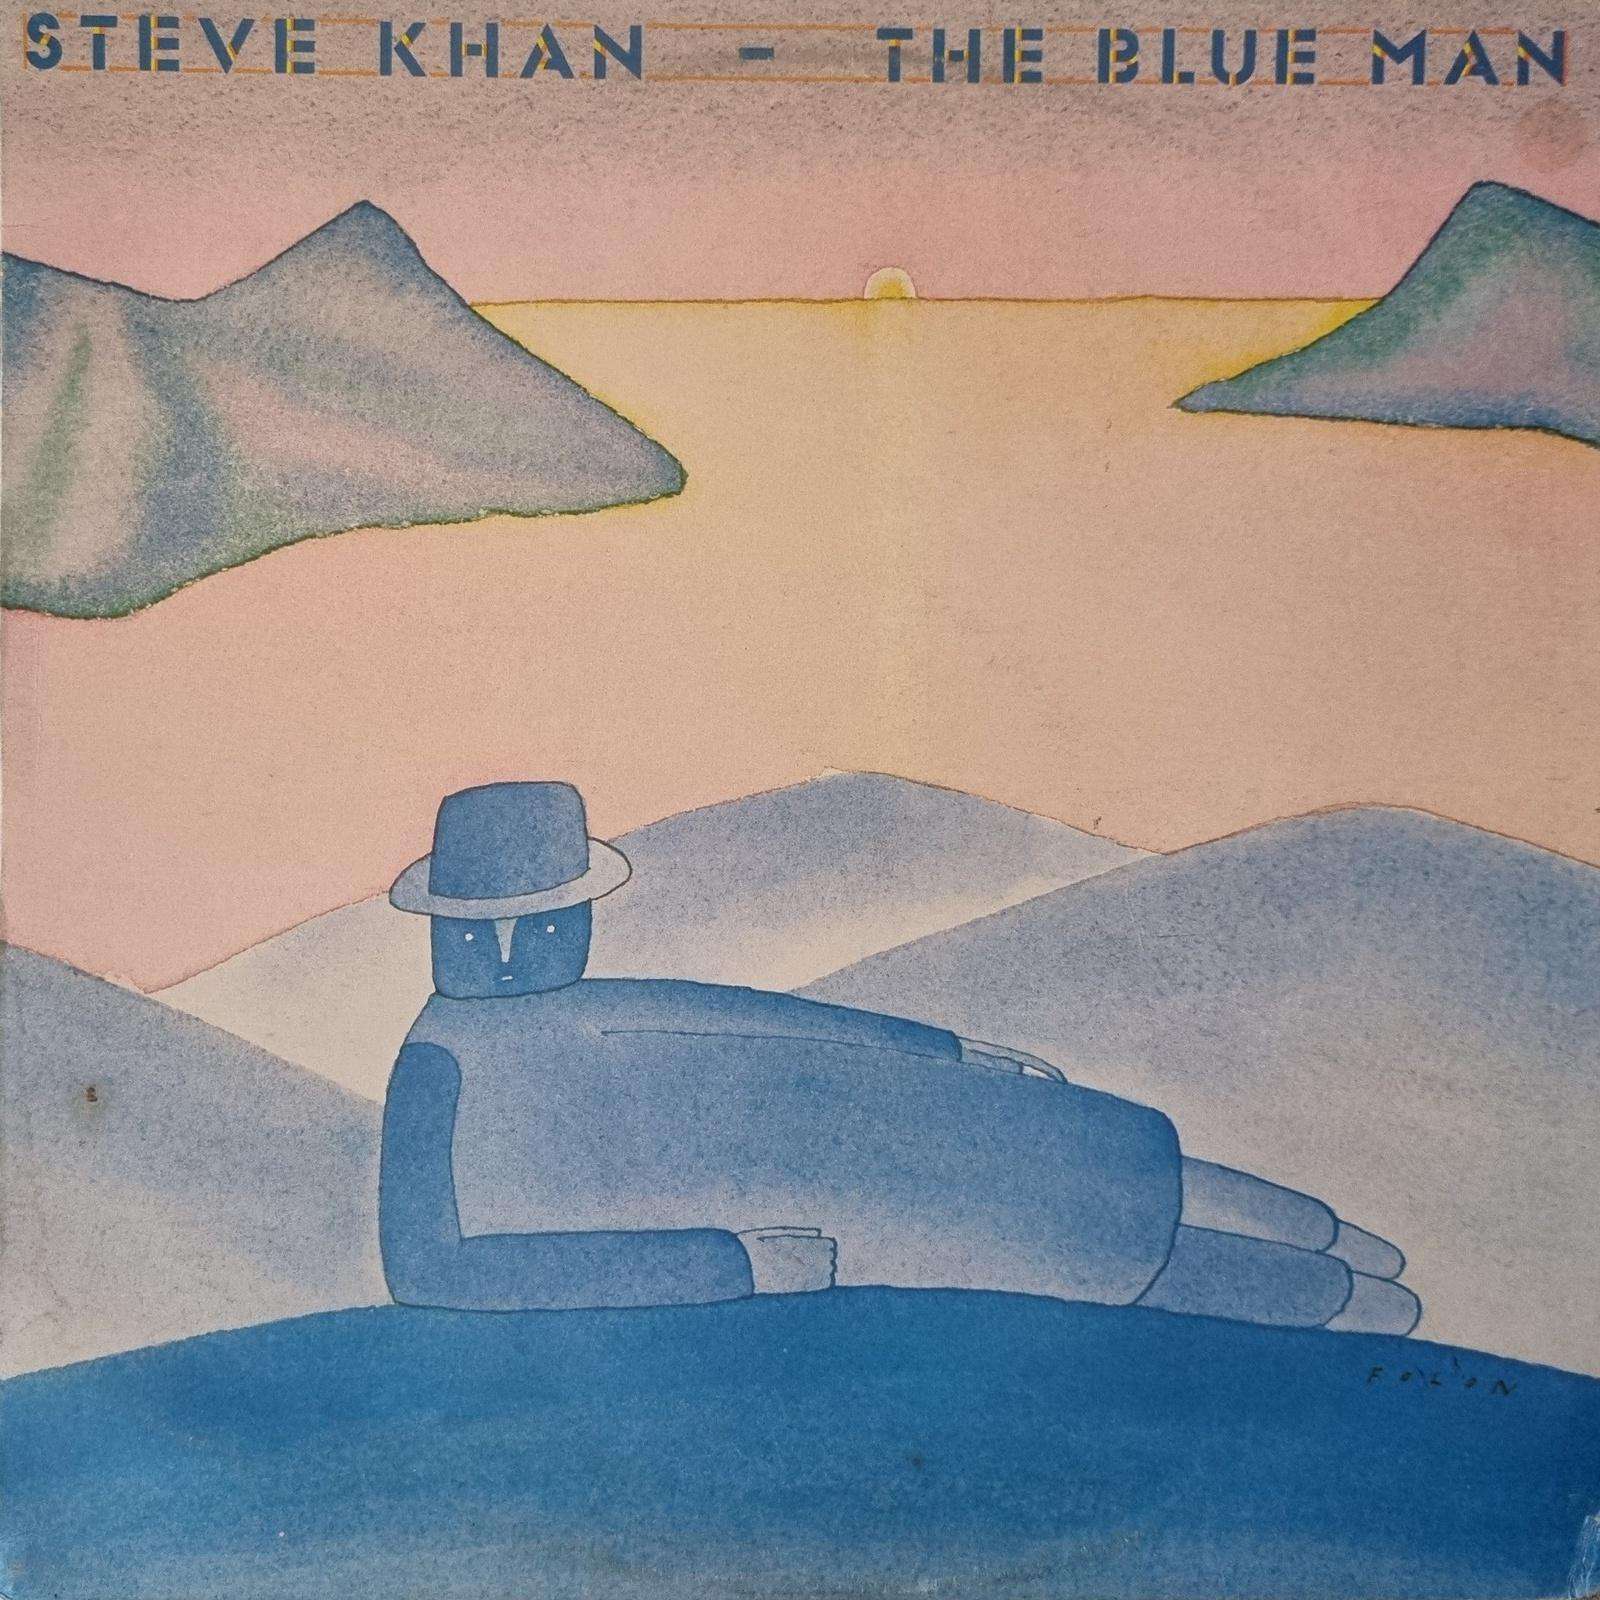 Steve Khan - The Blue Man